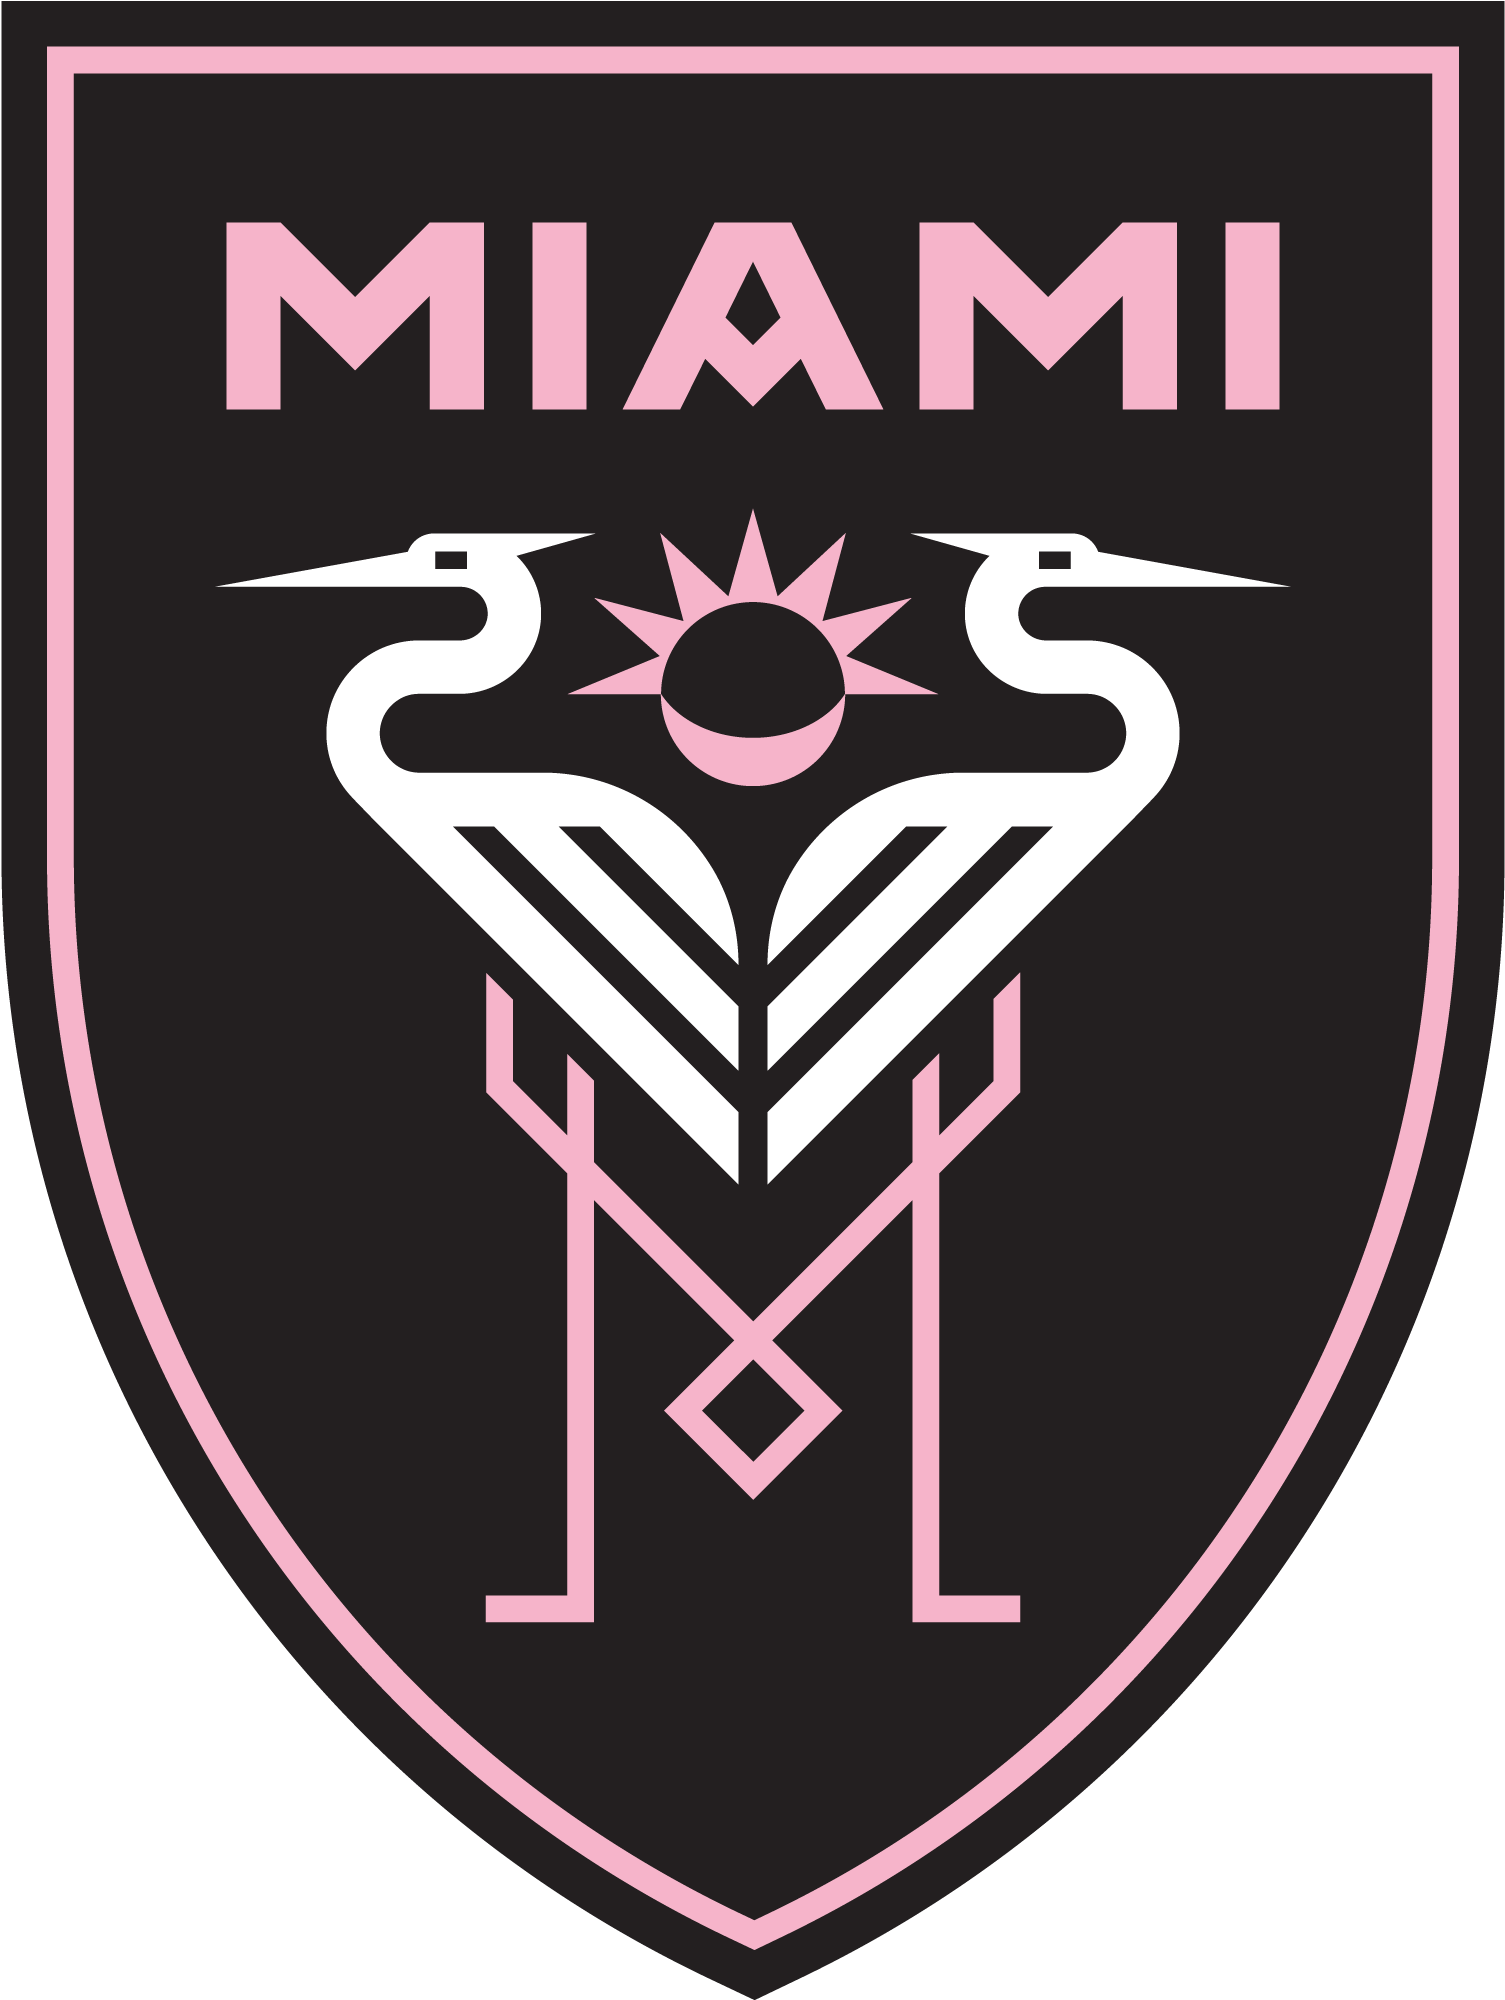 Download Miami Presspack Shield Inter Miami Fc Logo Png Image With No Background Pngkey Com